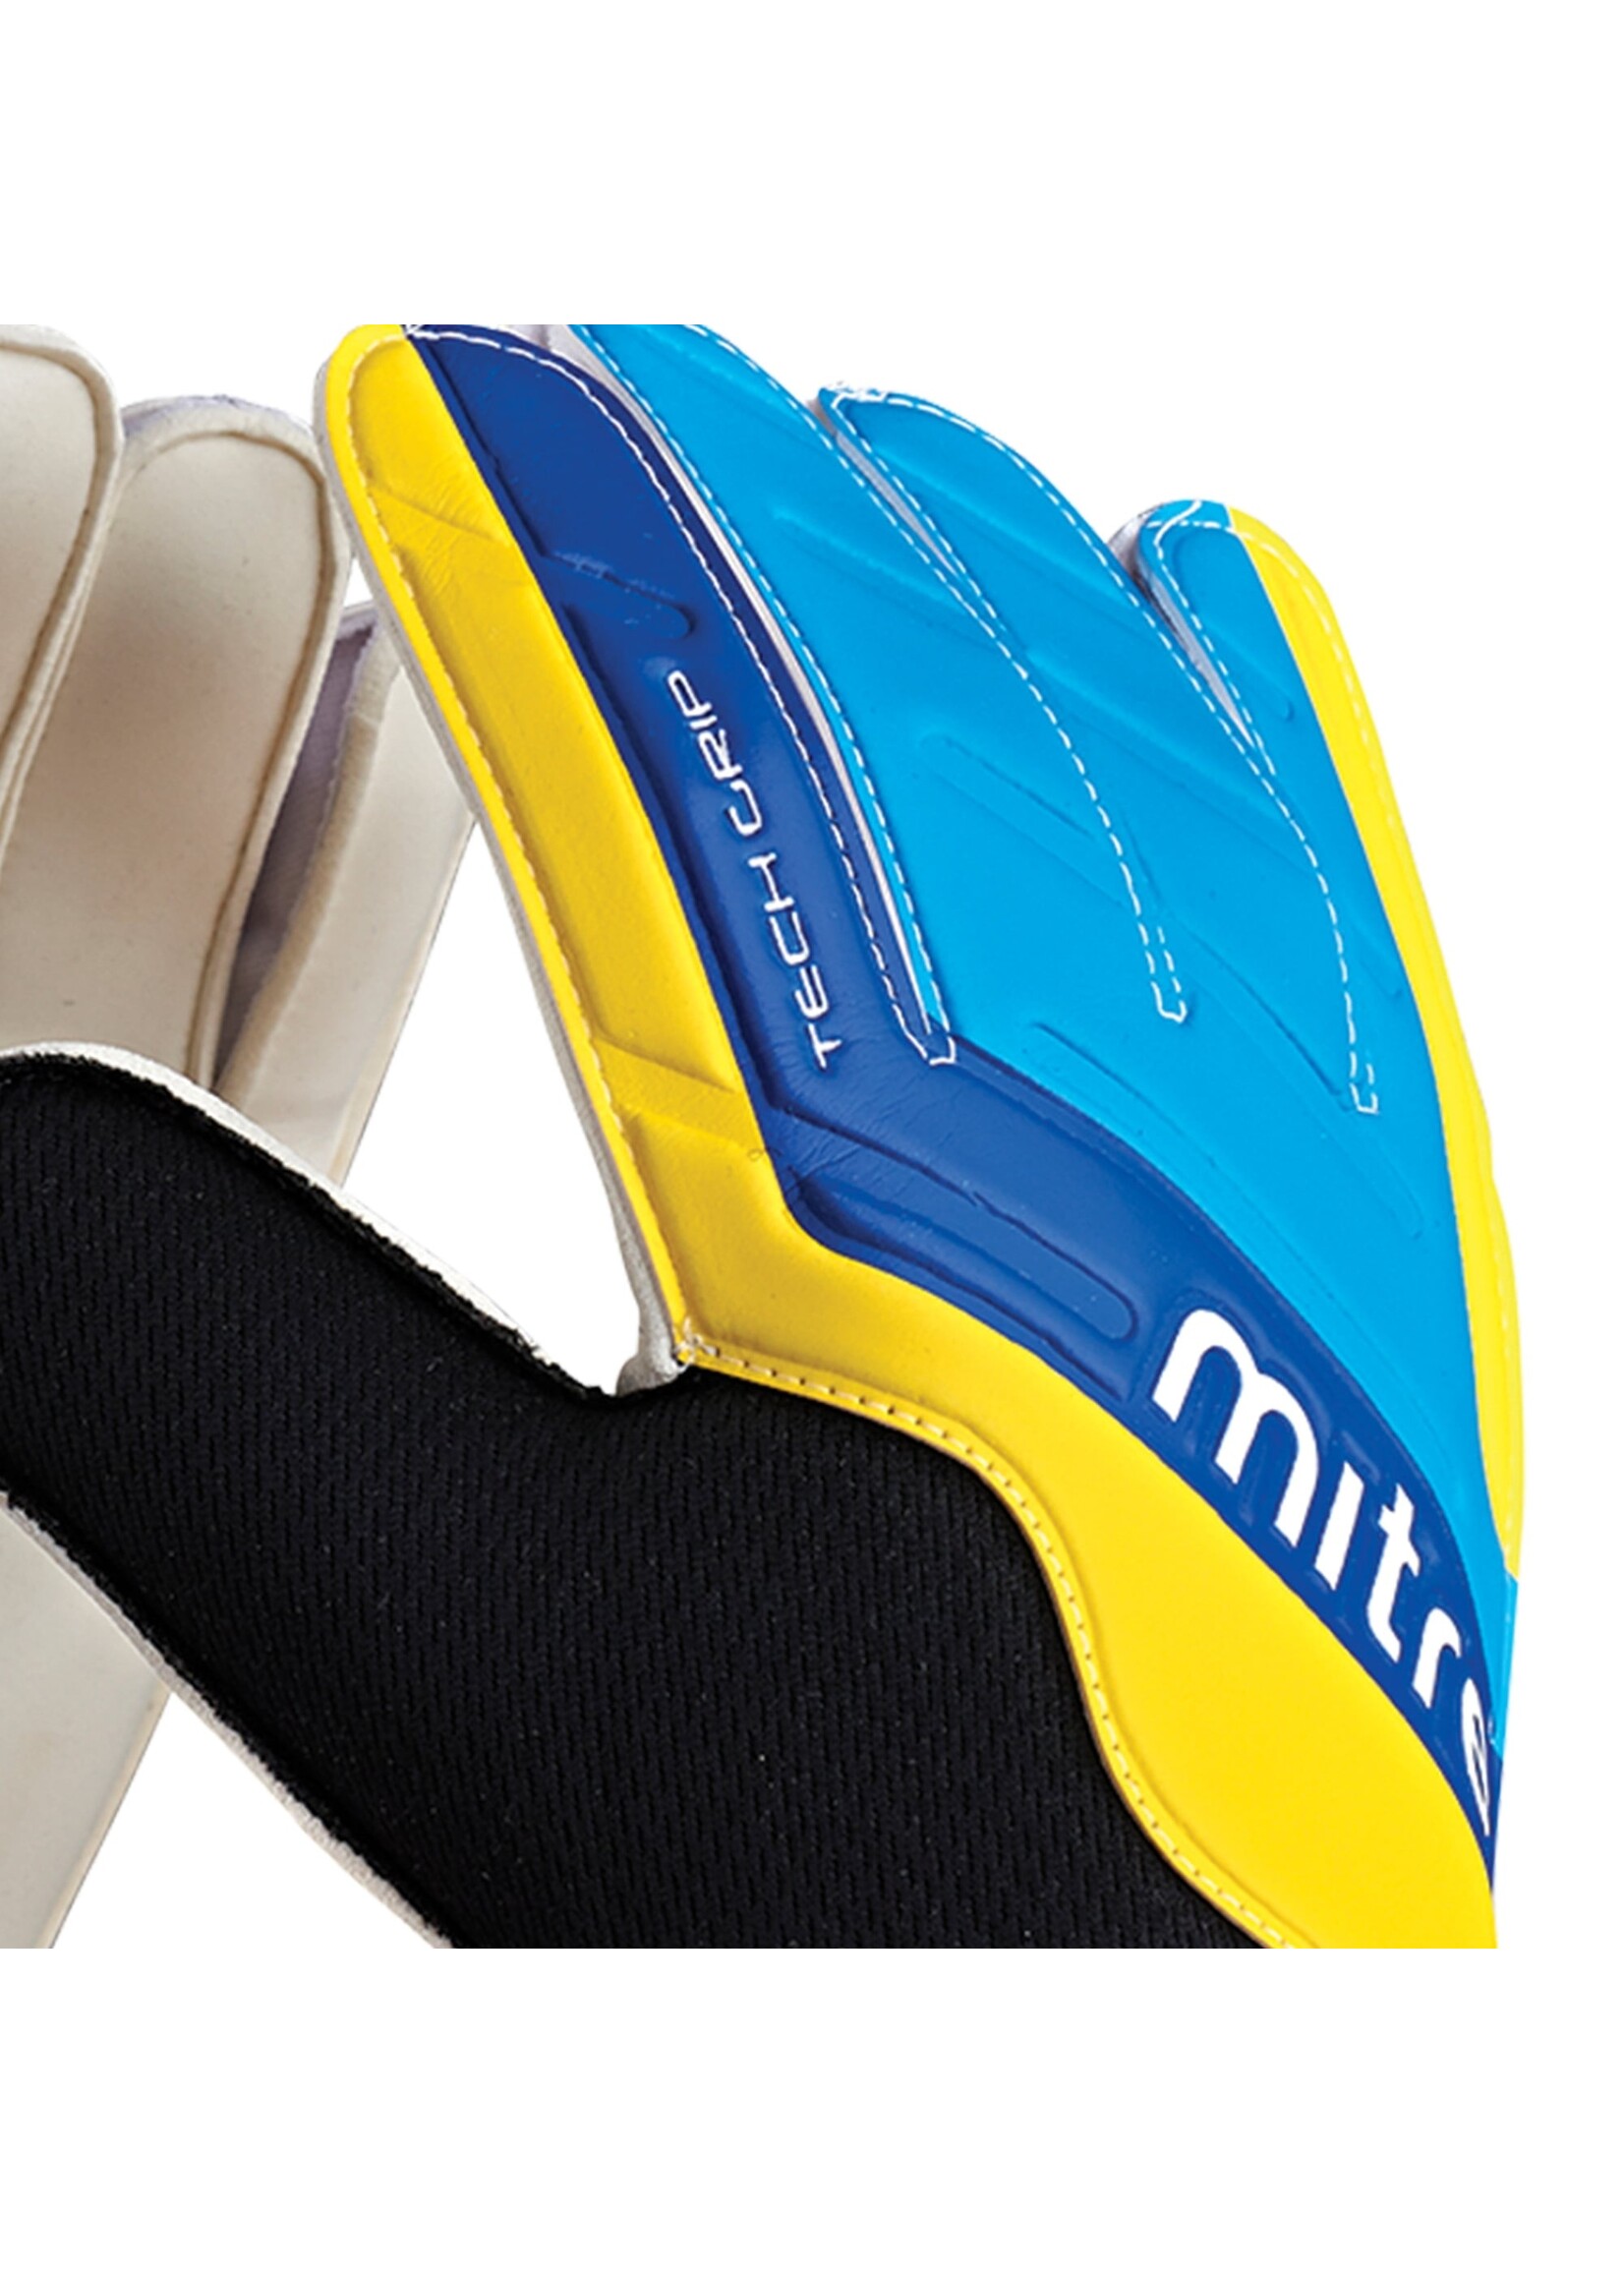 Mitre Mitre Magnetite Goalkeeping Gloves